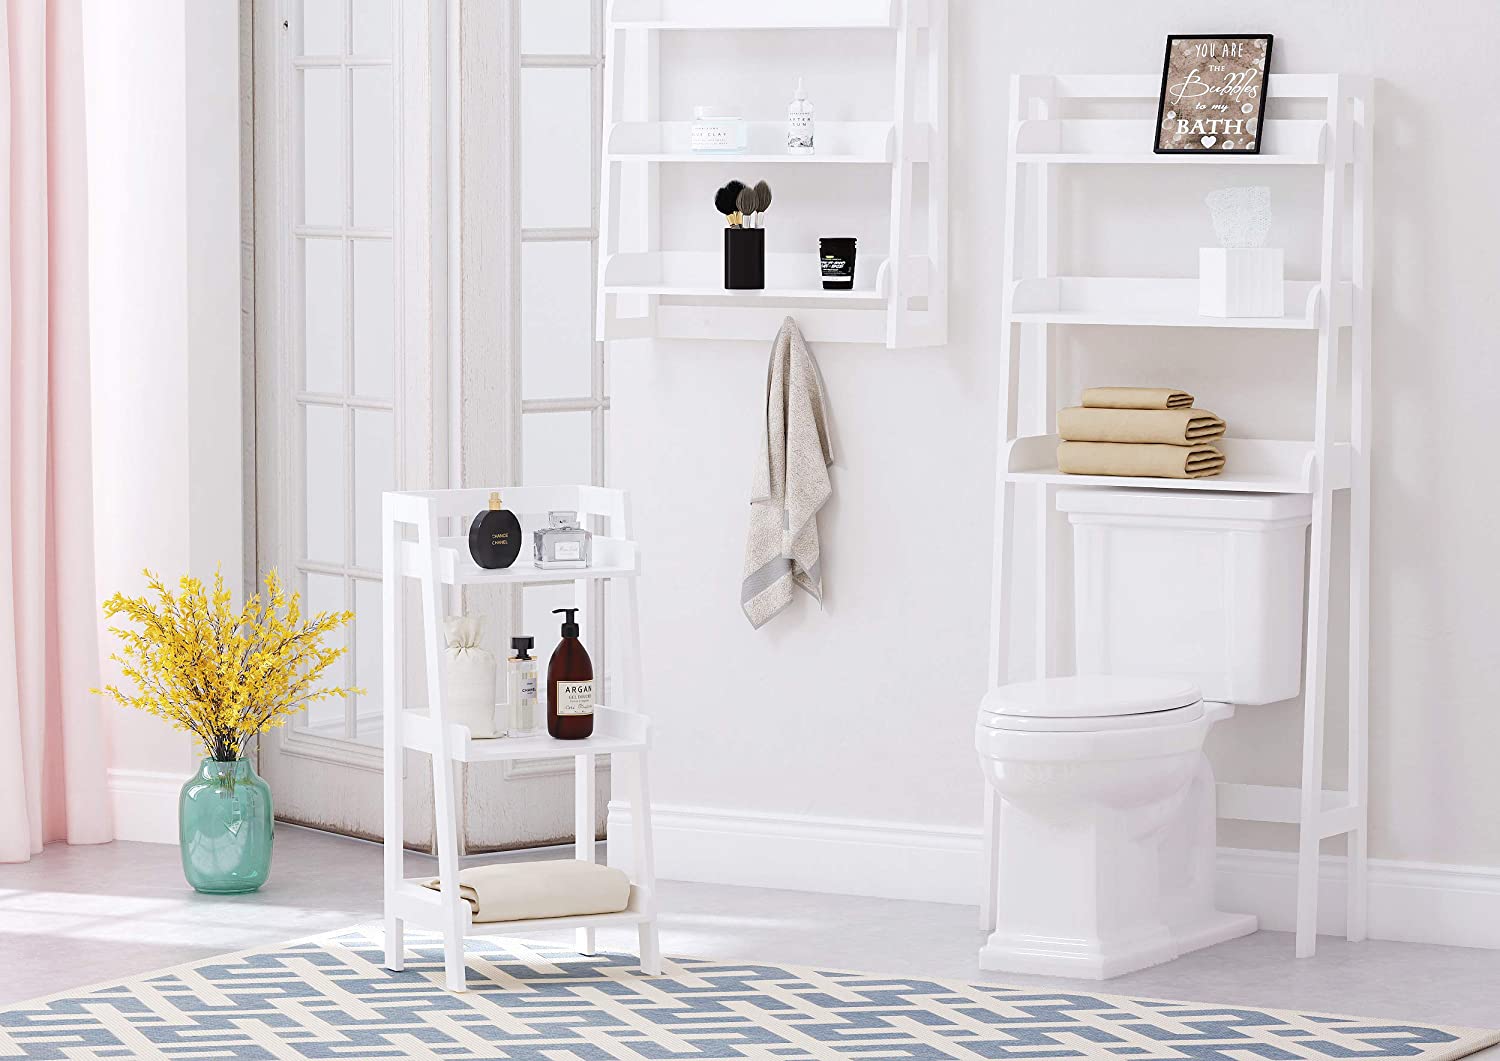 Utex 3 Tier Bathroom Shelf Wall Mounted with Towel Hooks, Bathroom Organizer Shelf Over The Toilet - White